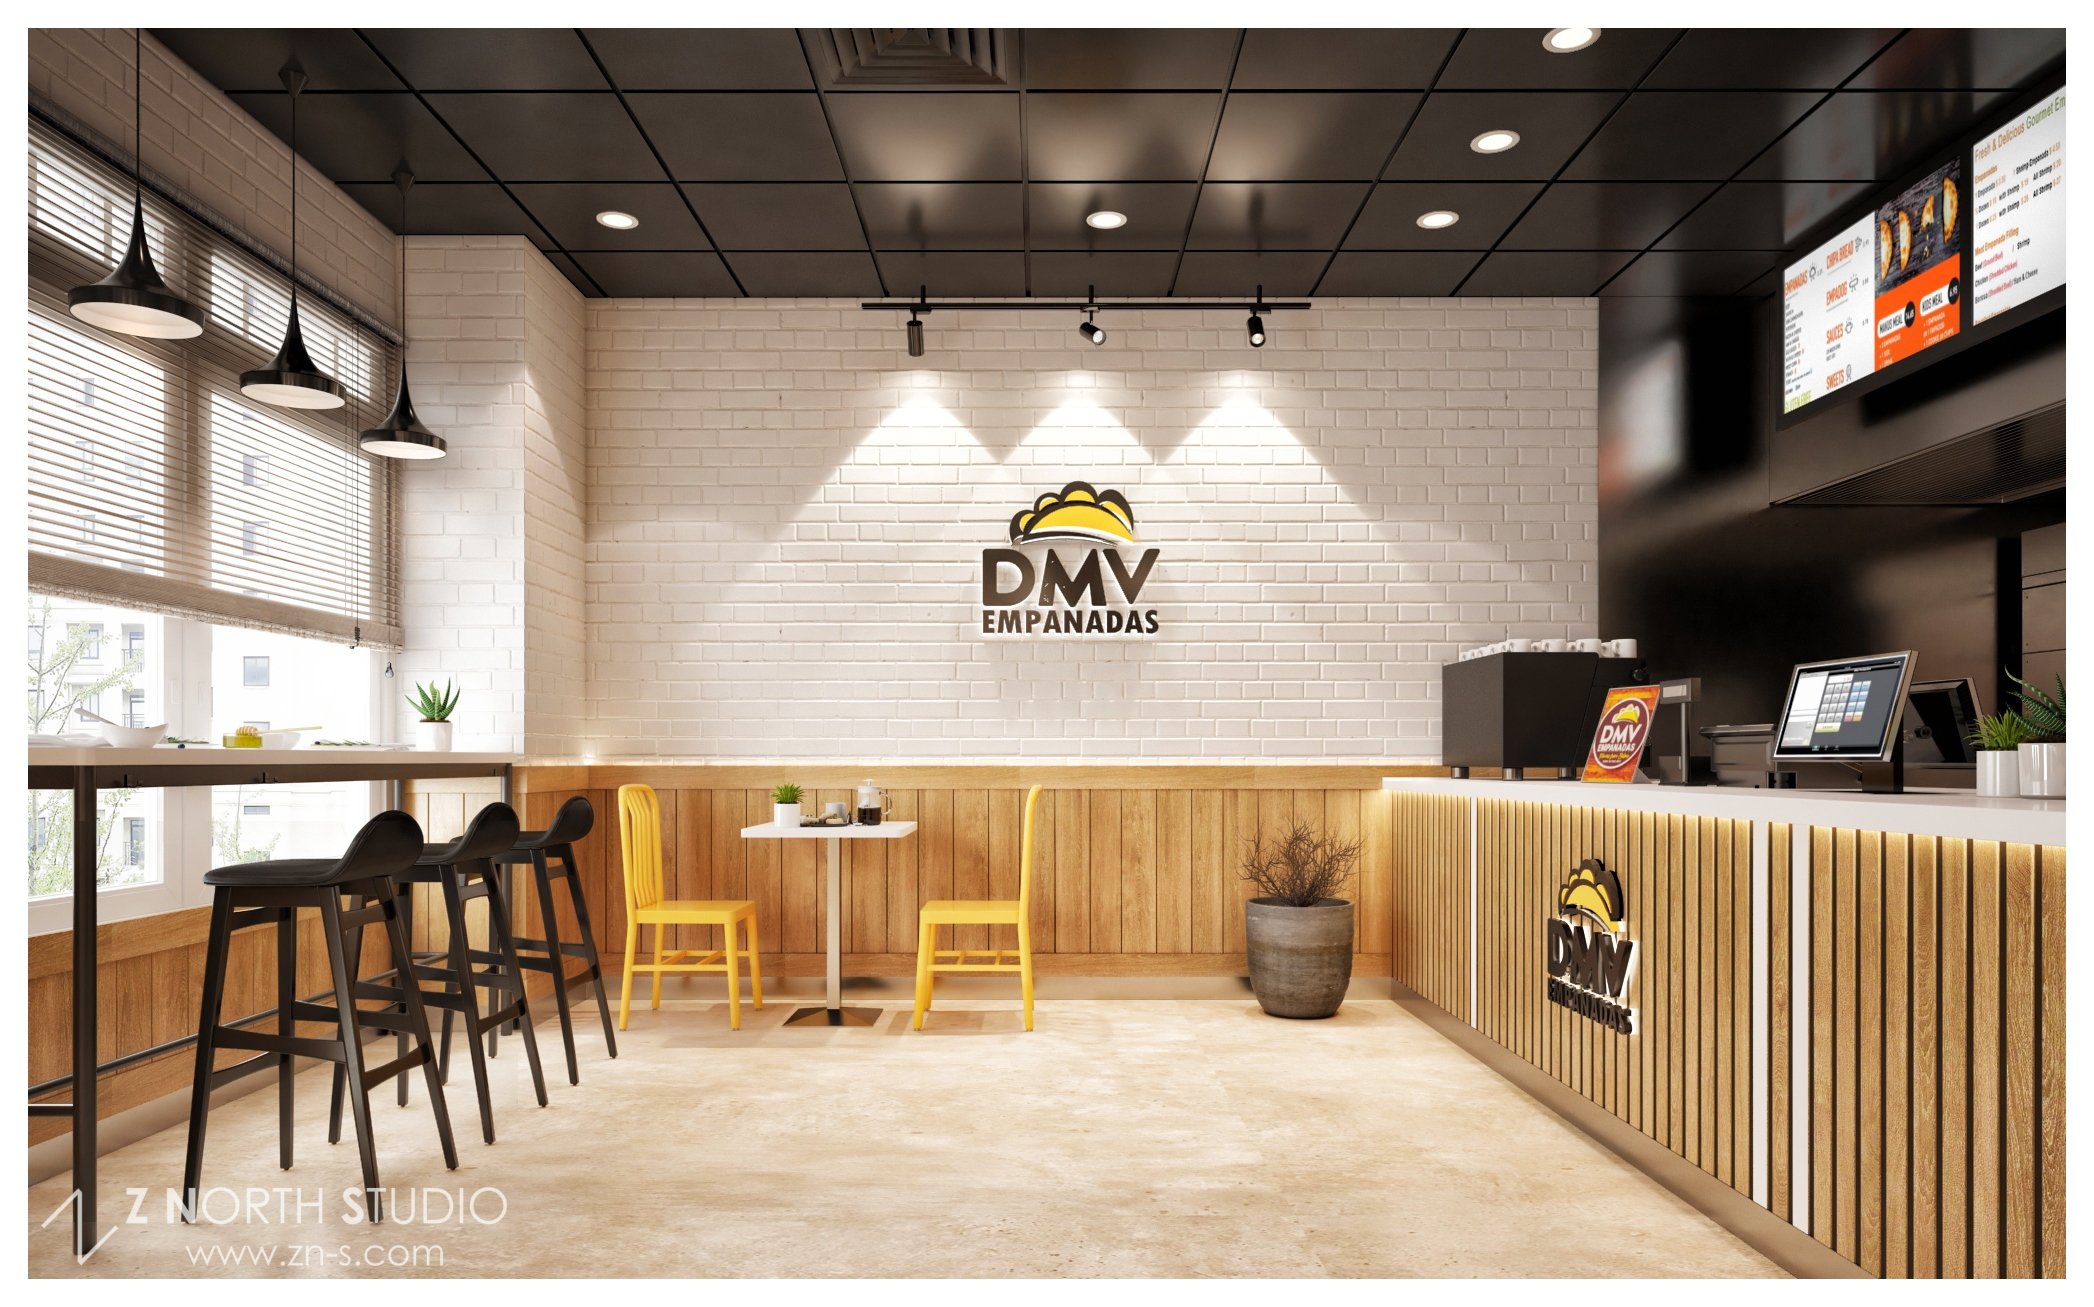 DMV Empanadas - Restaurant Interior Design - Z North Studio (1).jpg